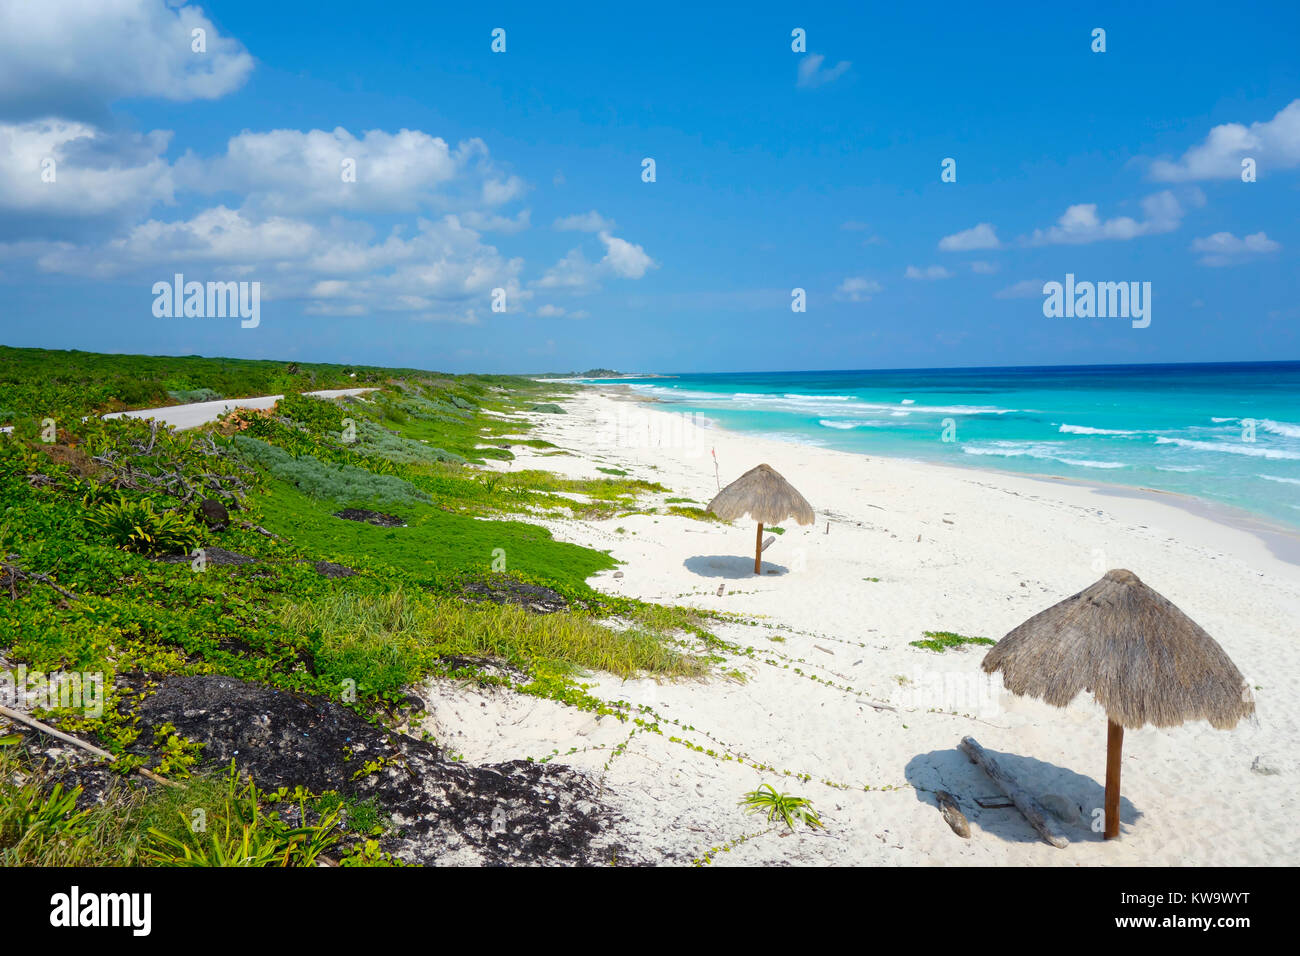 Playa San Martin, Cozumel Mexico Stock Photo - Alamy